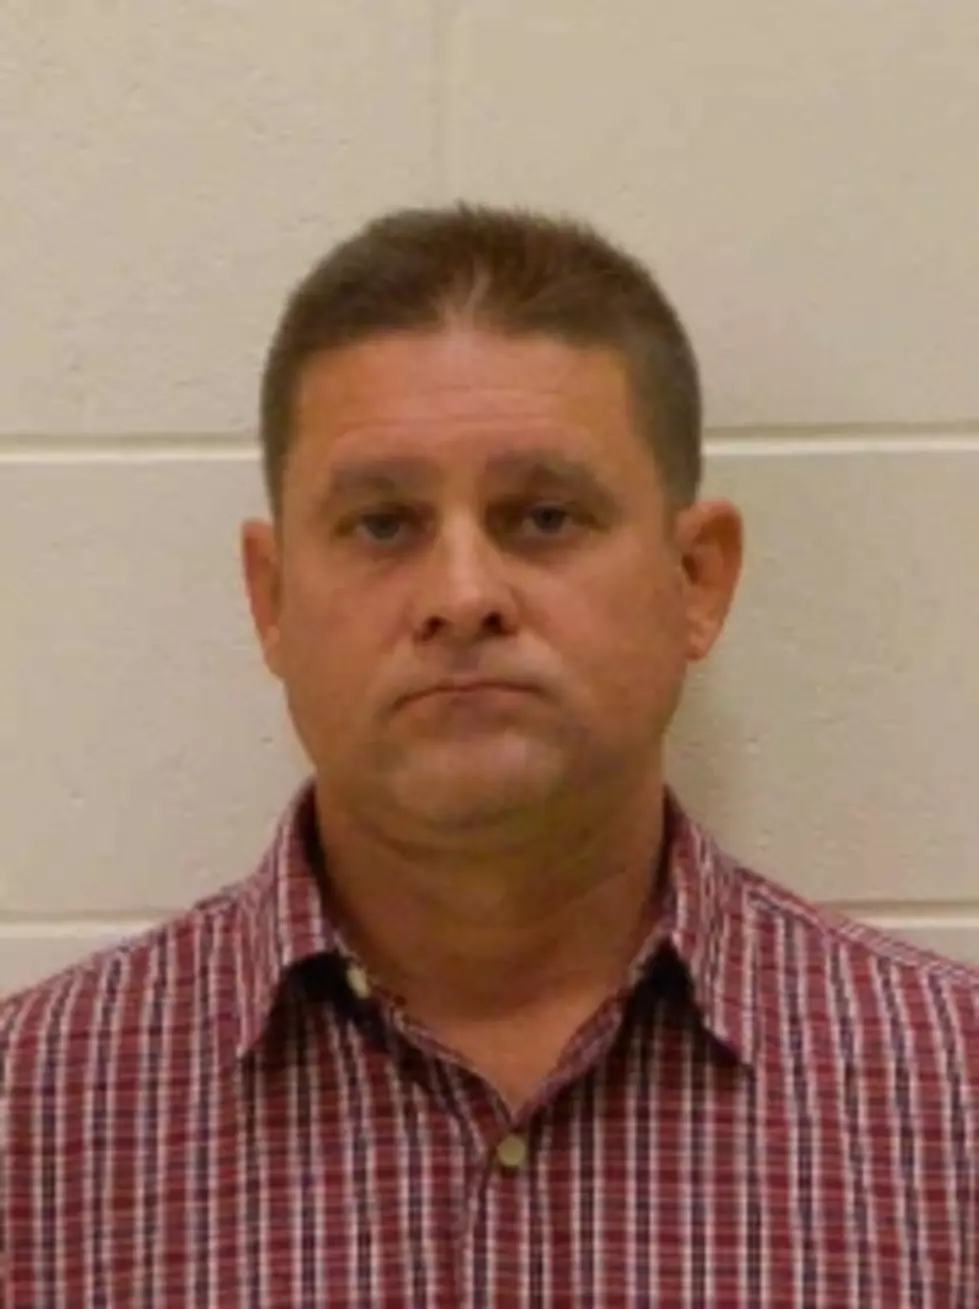 NE Iowan Sentenced to Prison for Choking, Beating Girlfriend